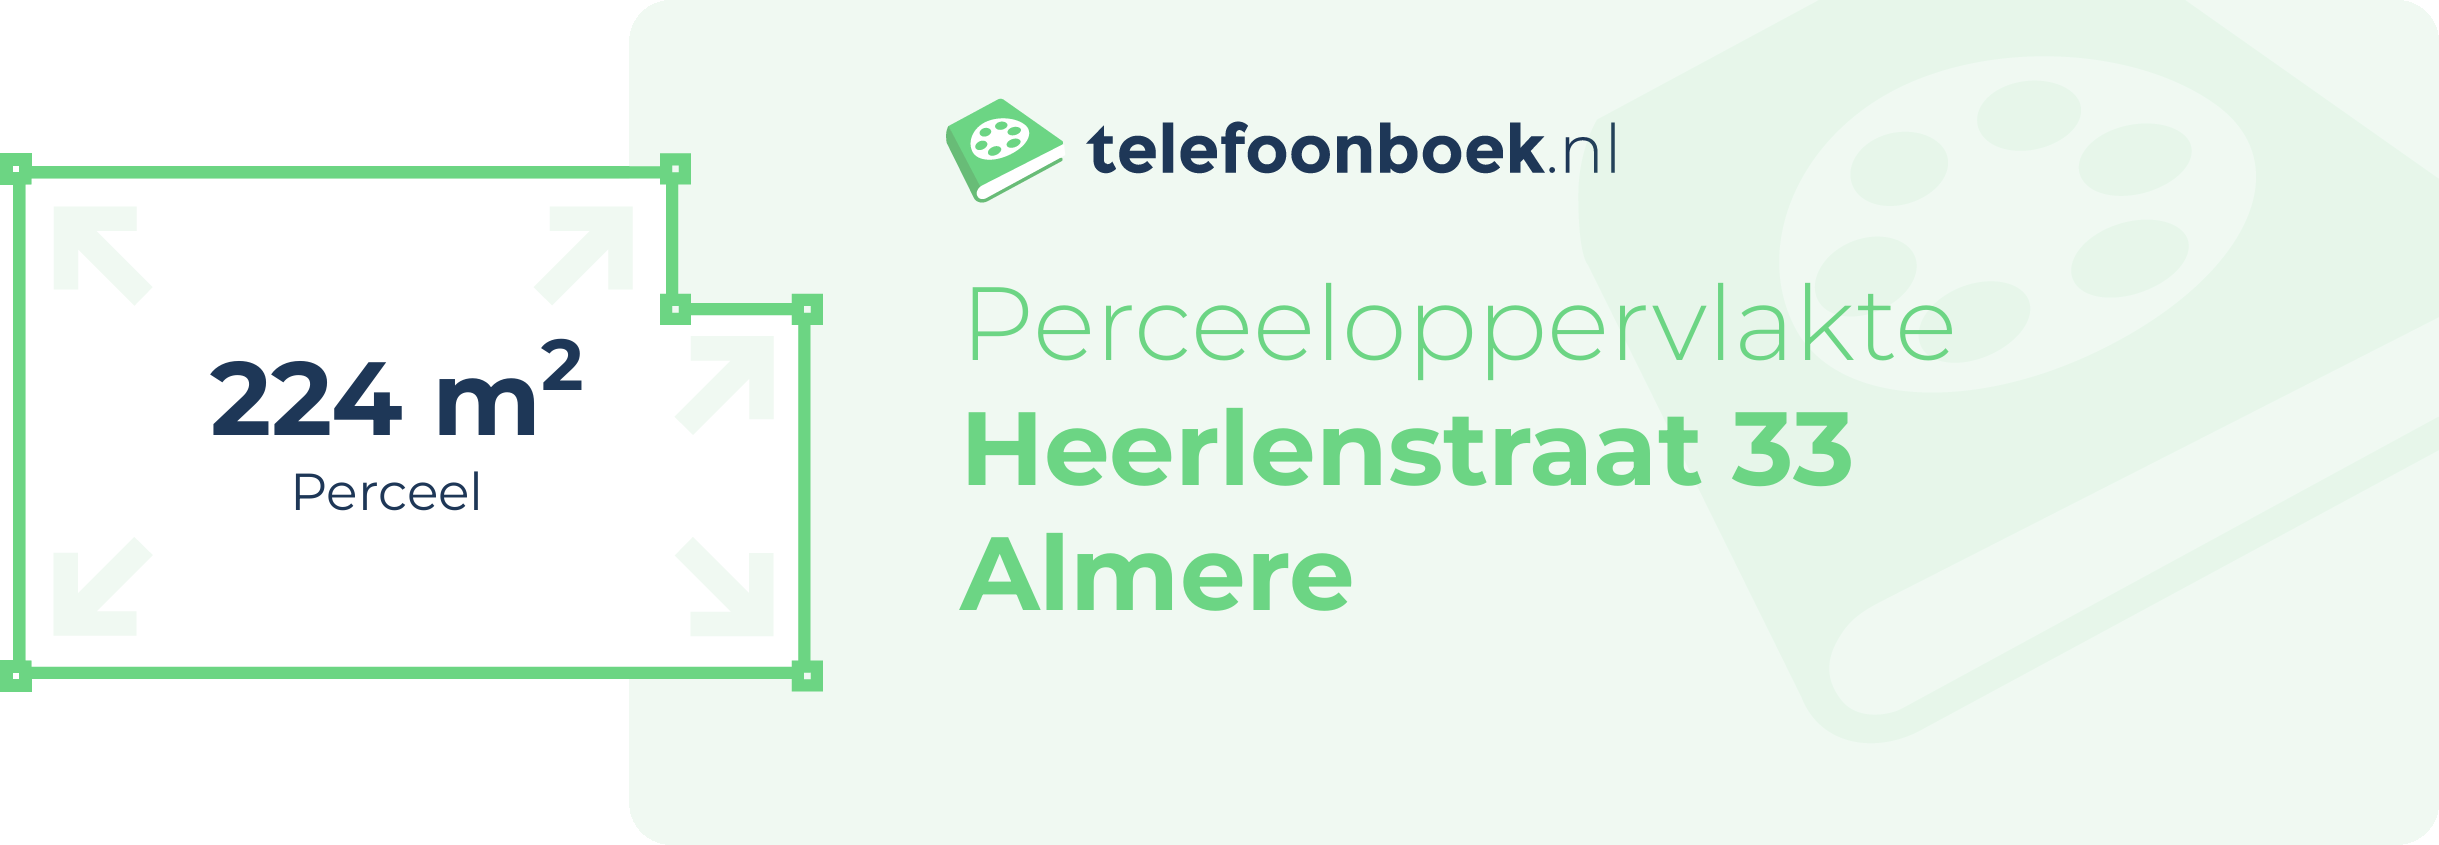 Perceeloppervlakte Heerlenstraat 33 Almere